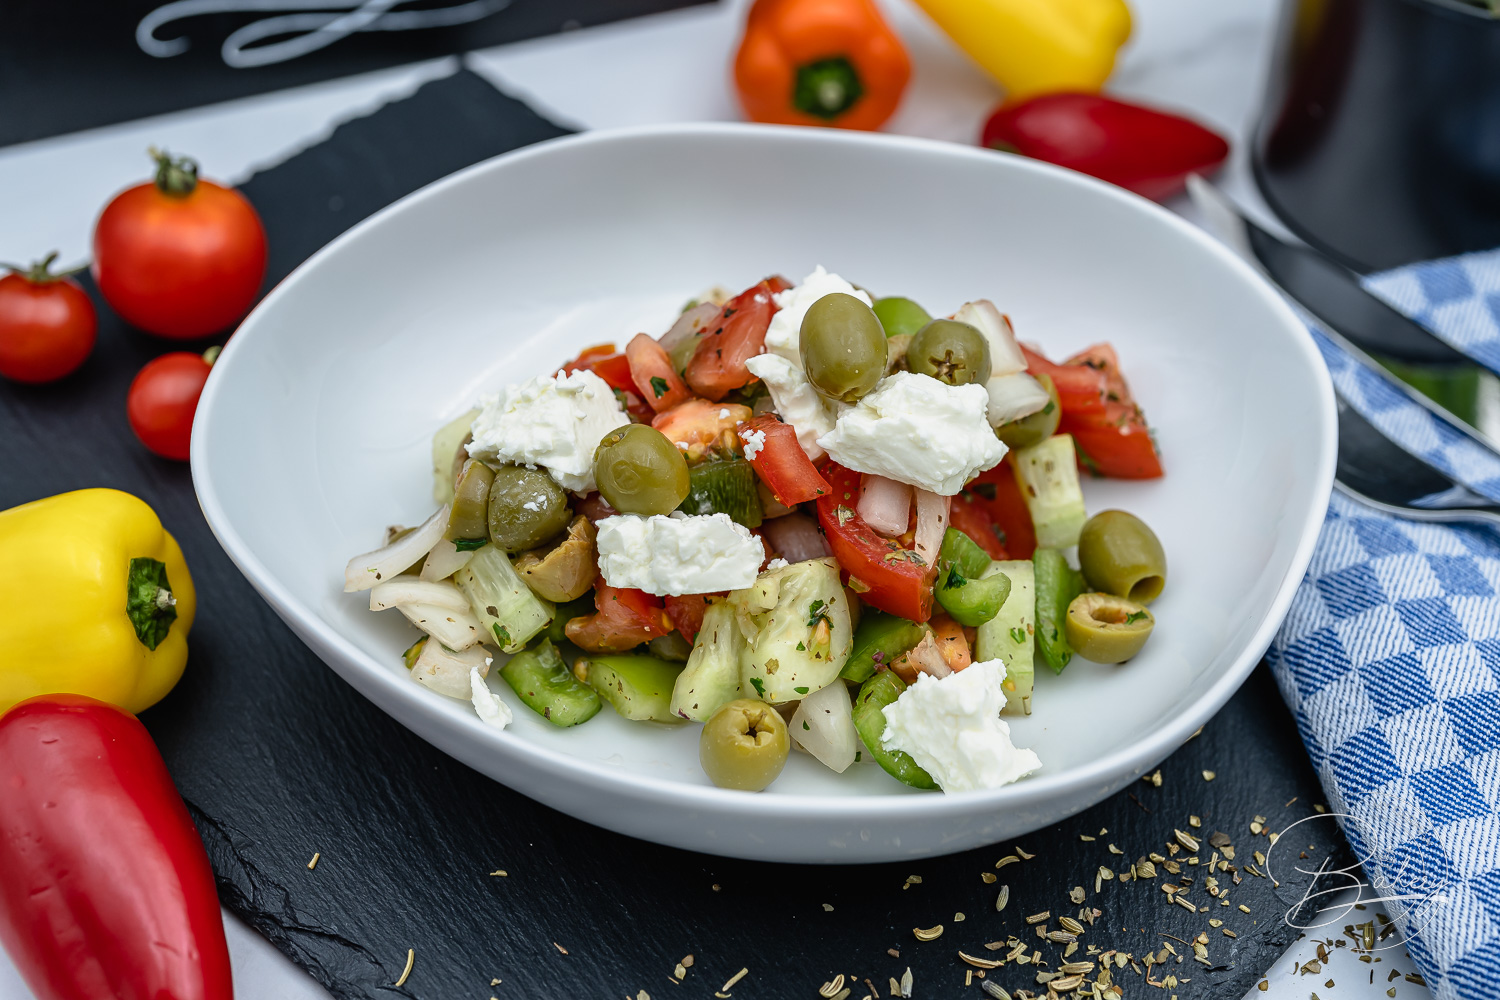 Greek farmer salad - Greek salad with feta - light Greek salad with feta for summer and barbecue - Greek salad with feta cheese - Balkan style summer salad - Healthy food